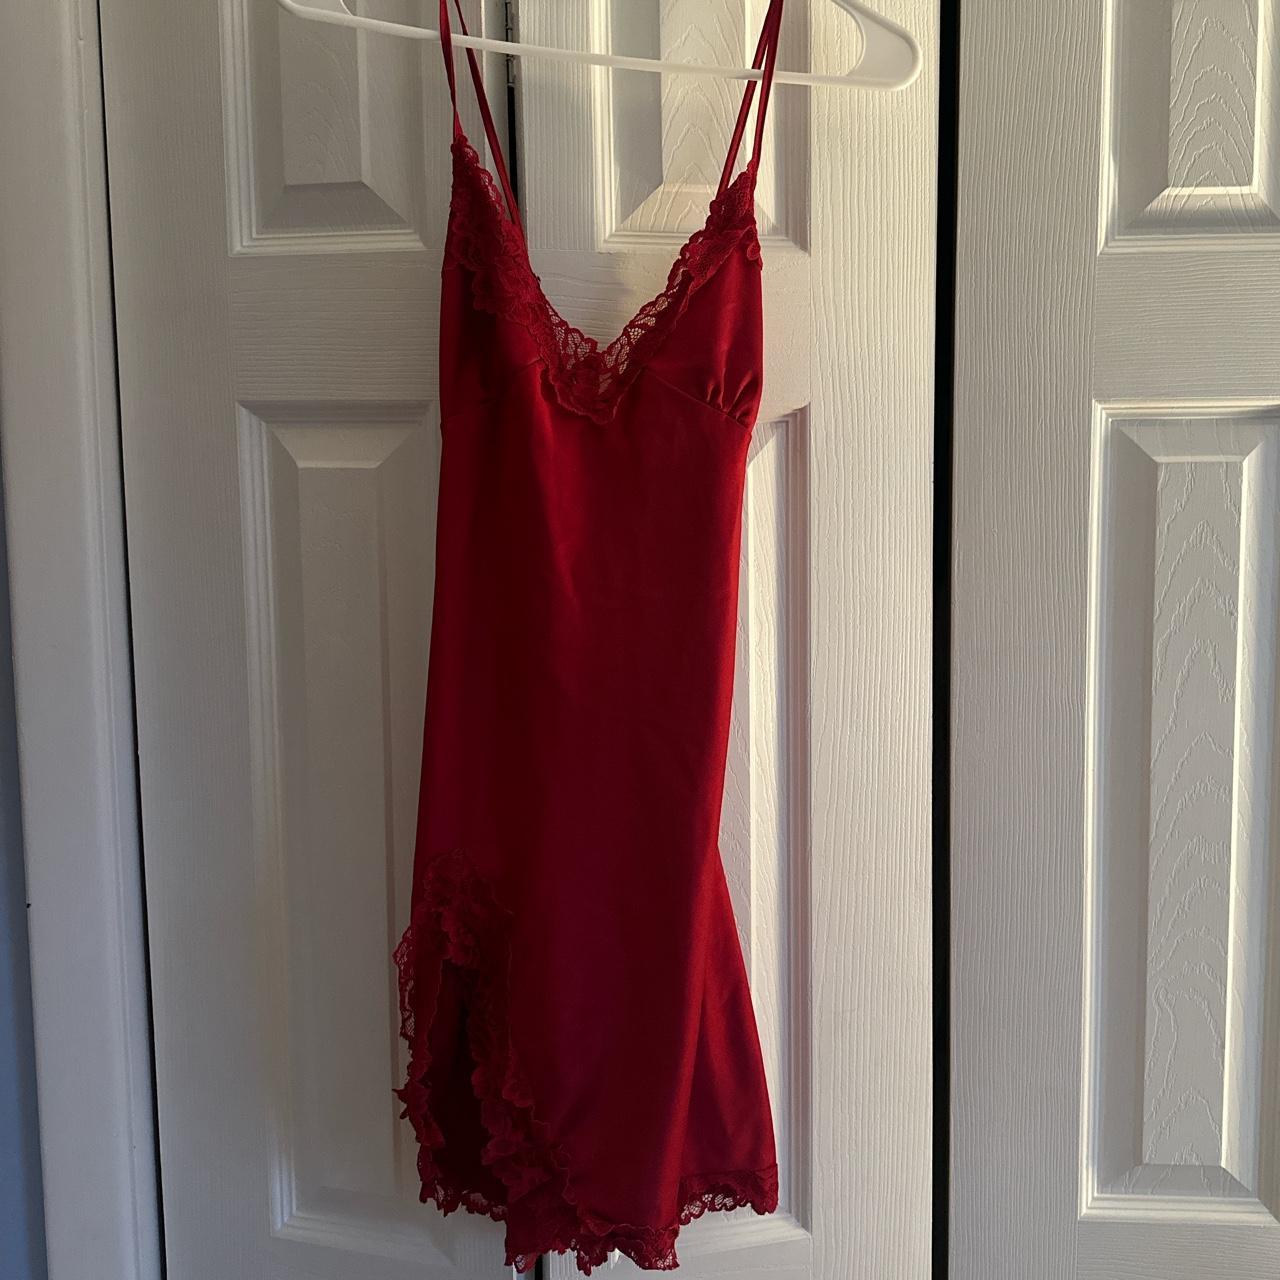 Red lace slip dress with slit - Depop